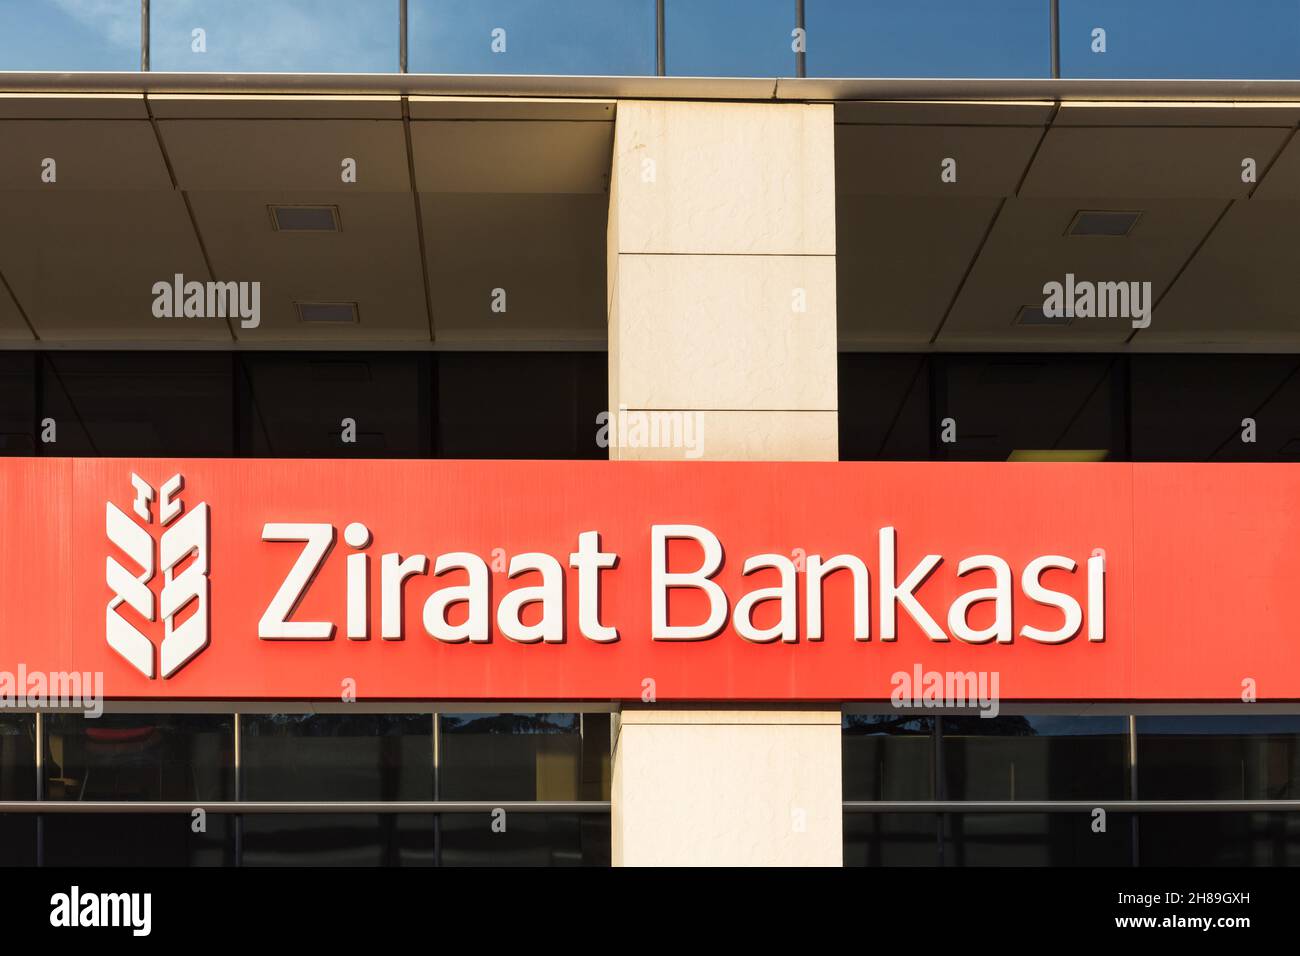 Ziraat bank logo hi-res stock photography and images - Alamy